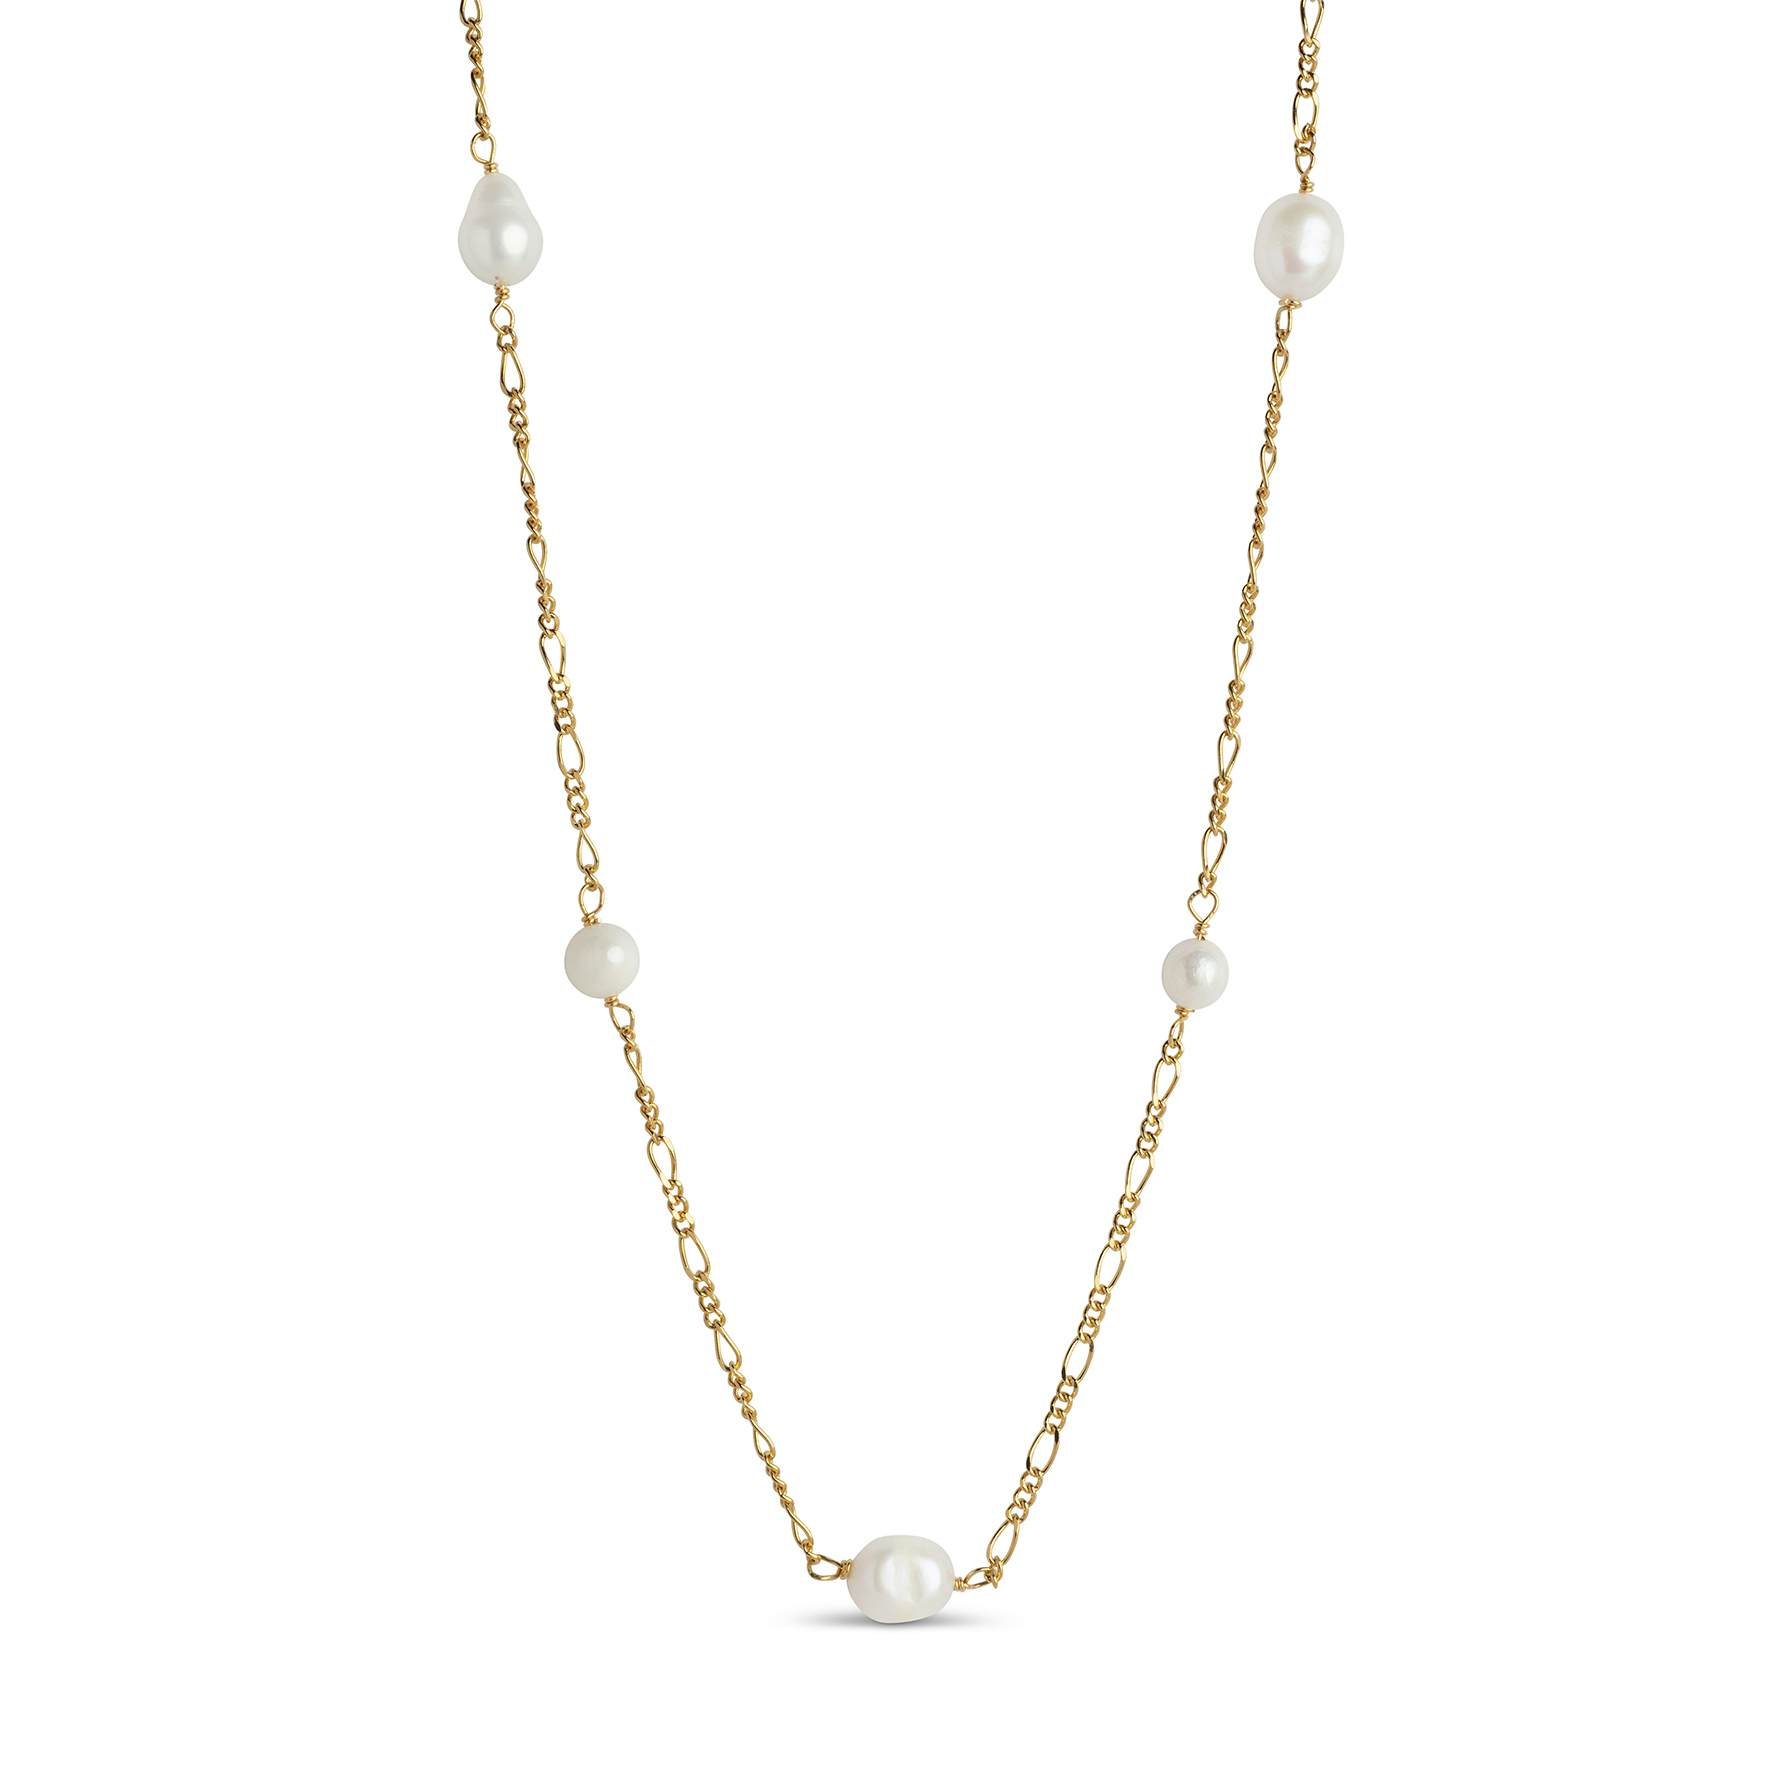 Brielle Pearl Necklace von Enamel Copenhagen in Vergoldet-Silber Sterling 925|Freshwater Pearl